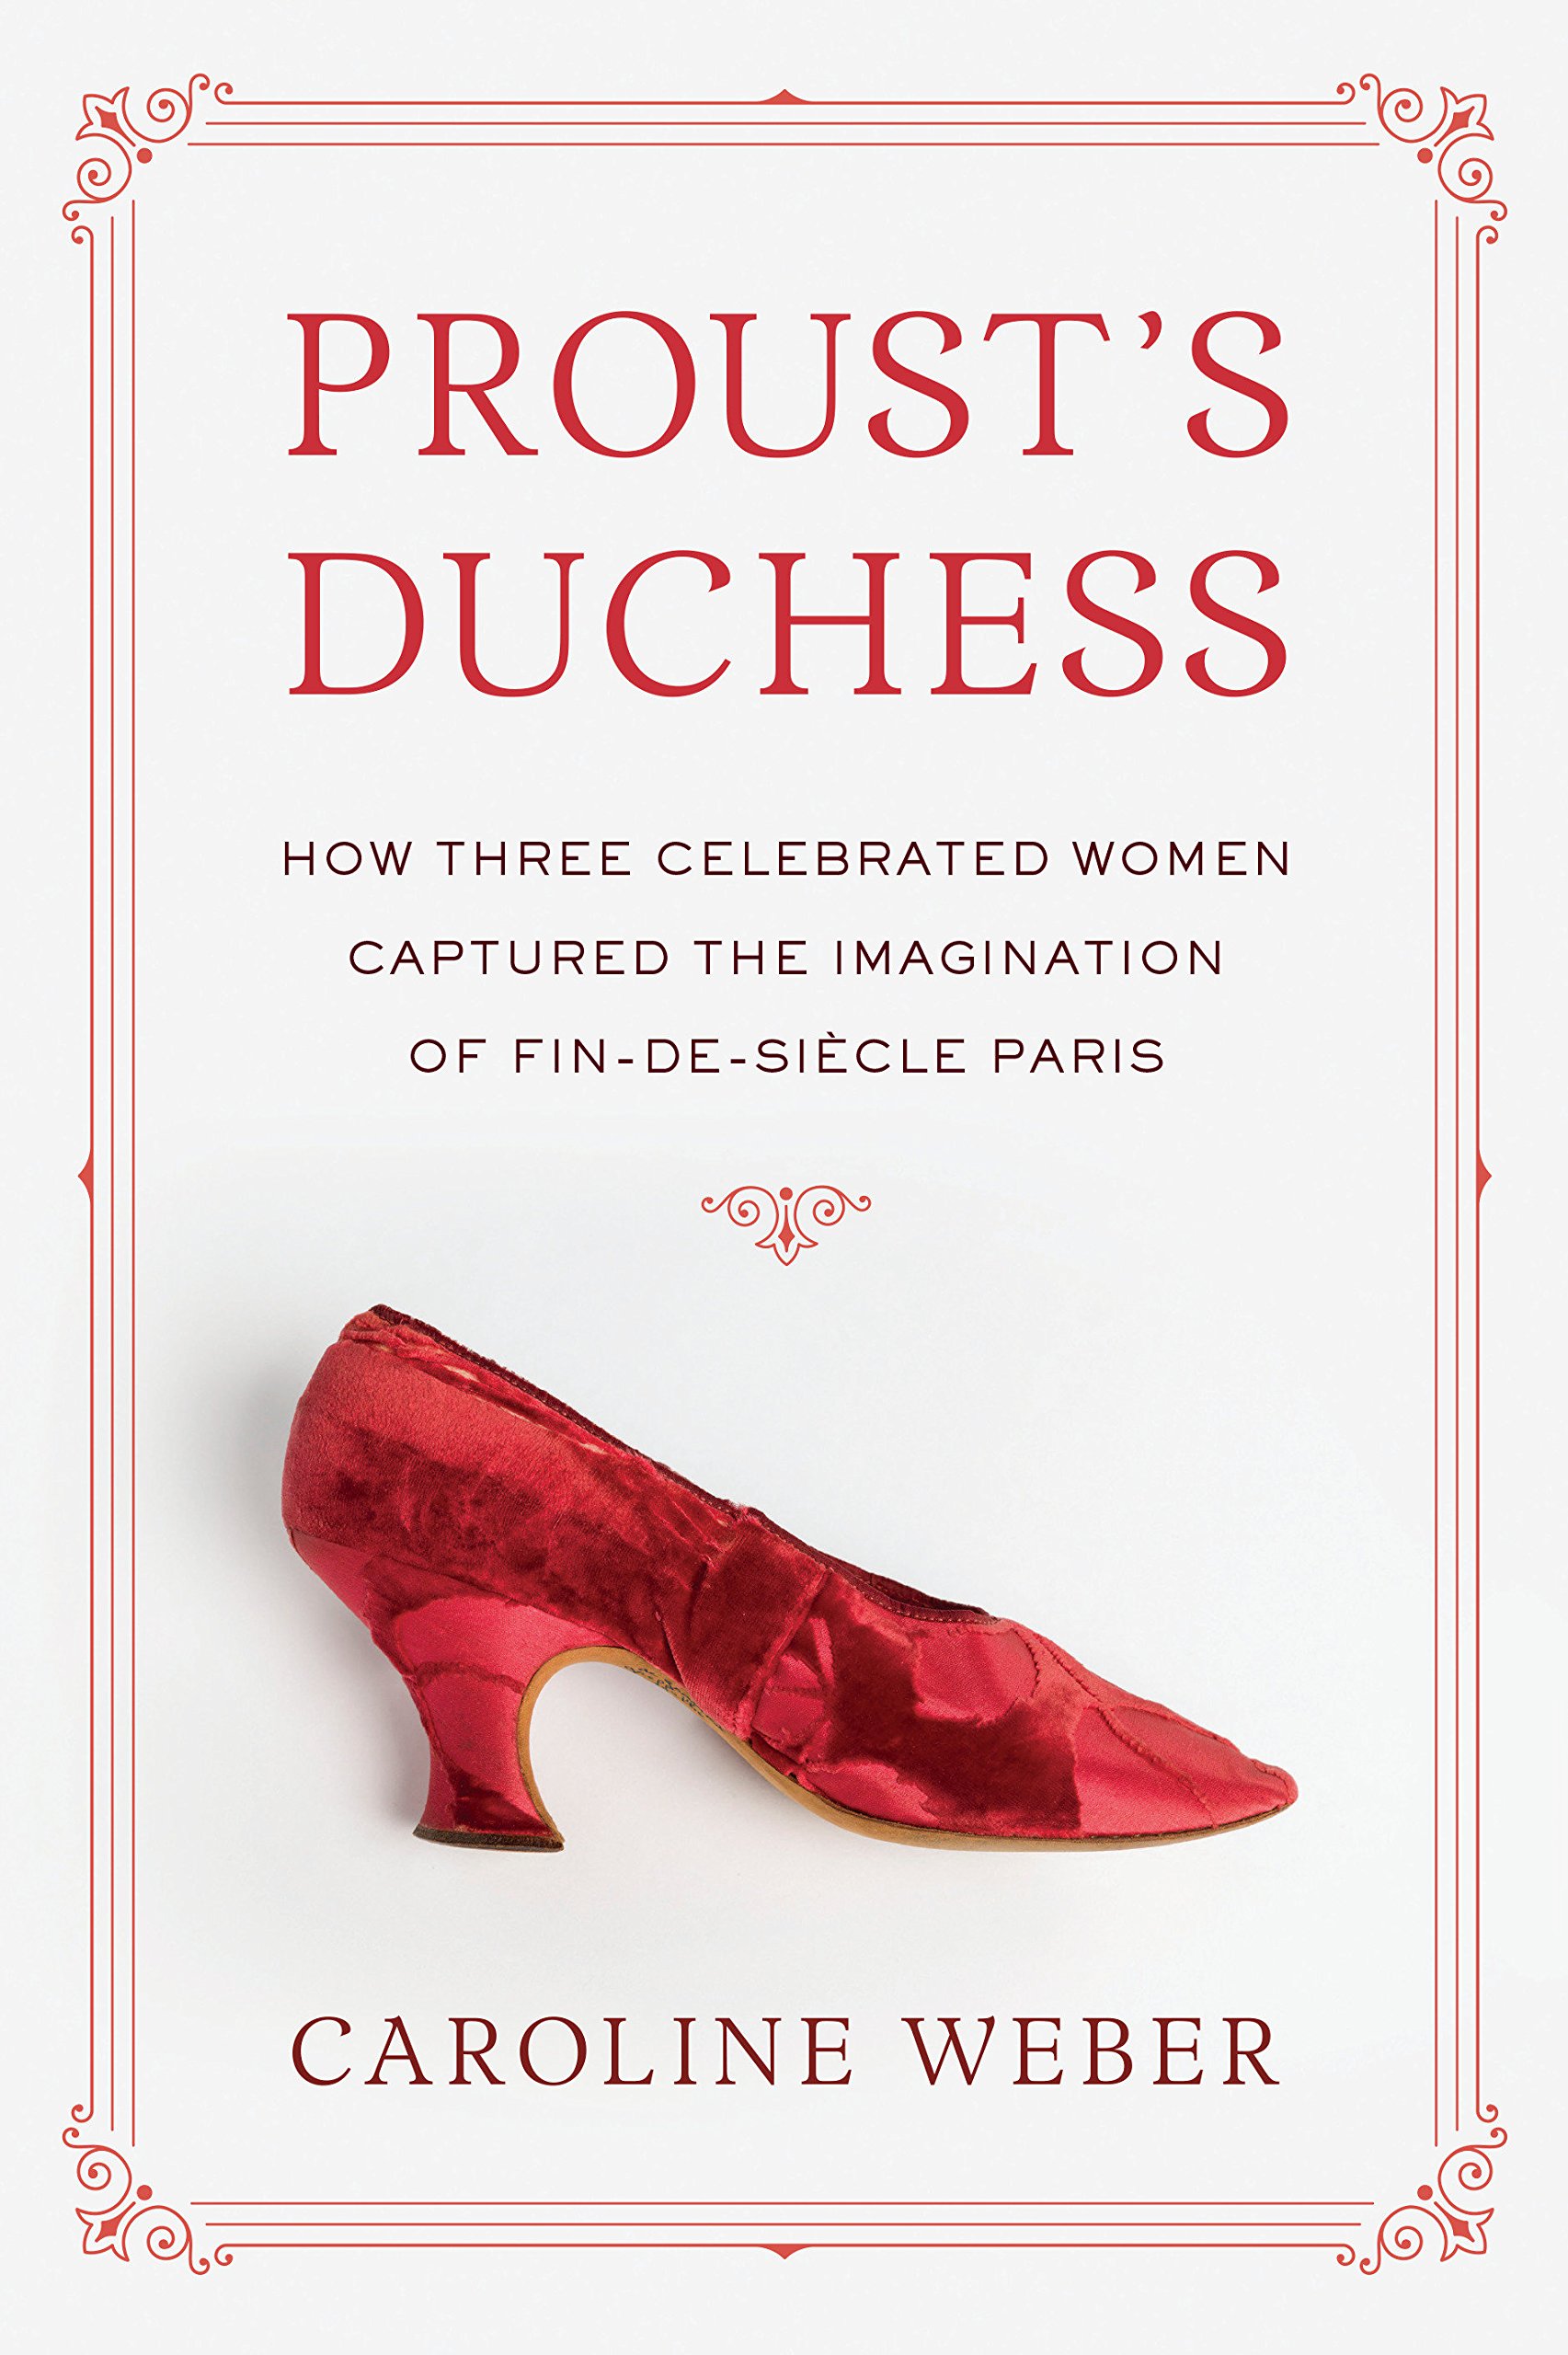 Proust's Duchess Book Club